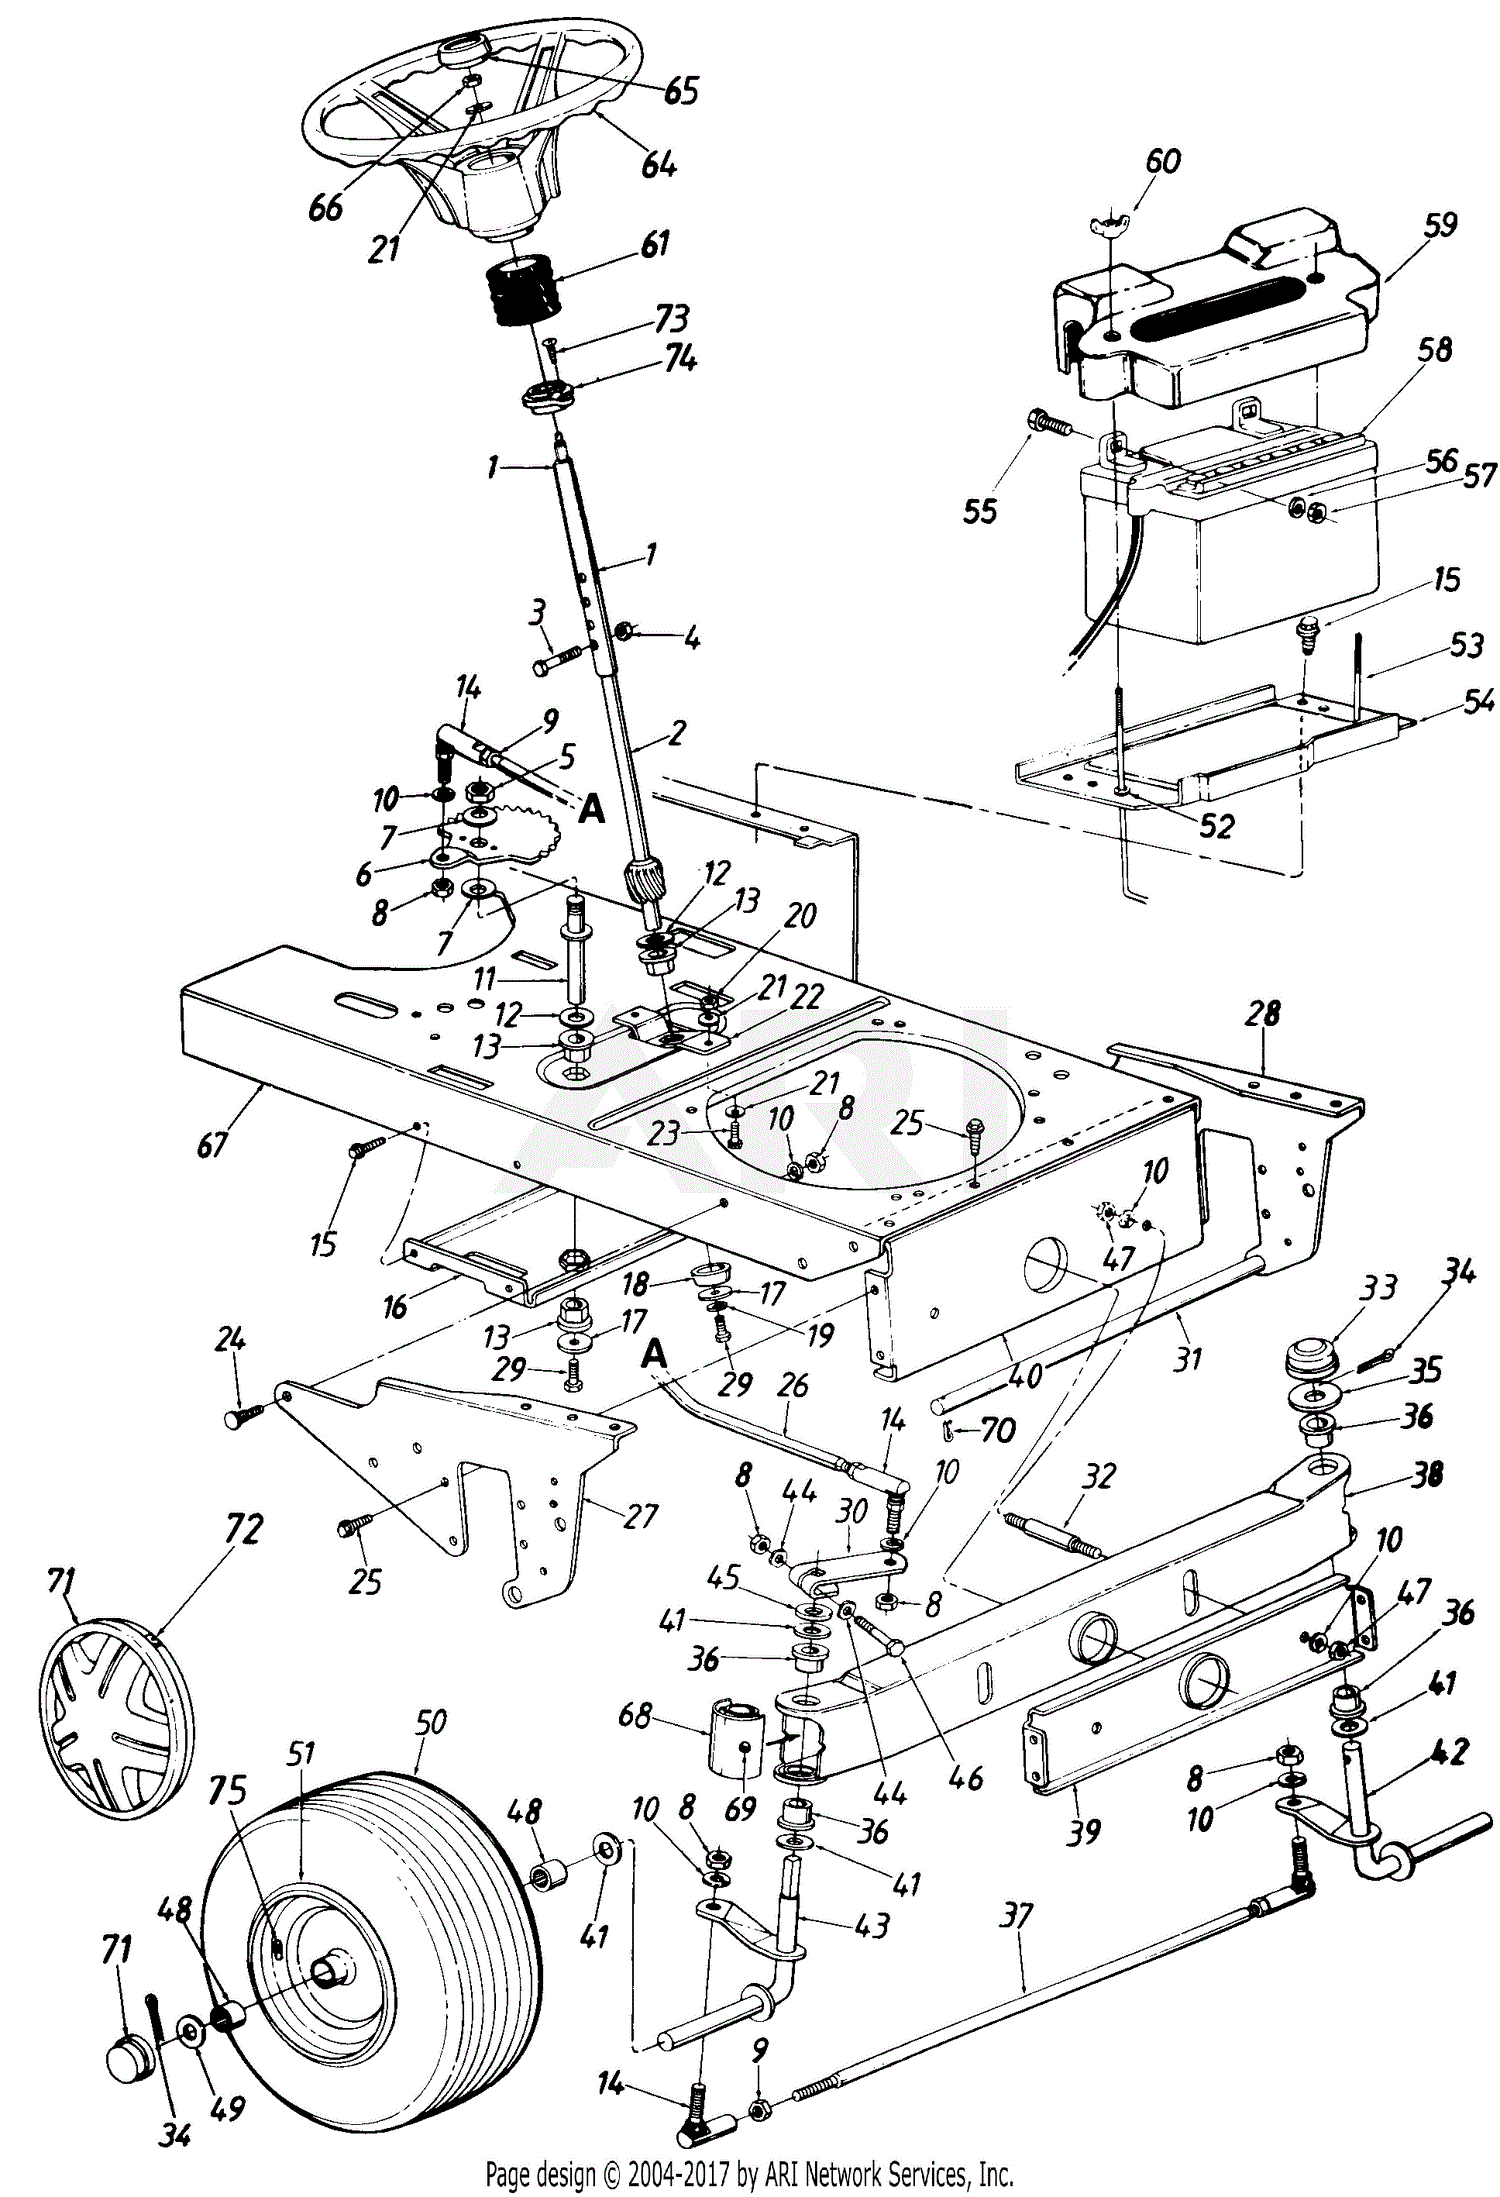 Mtd Lawn Tractor Parts Diagram Mtd 13w2775s231 Lt4200 2013 Parts